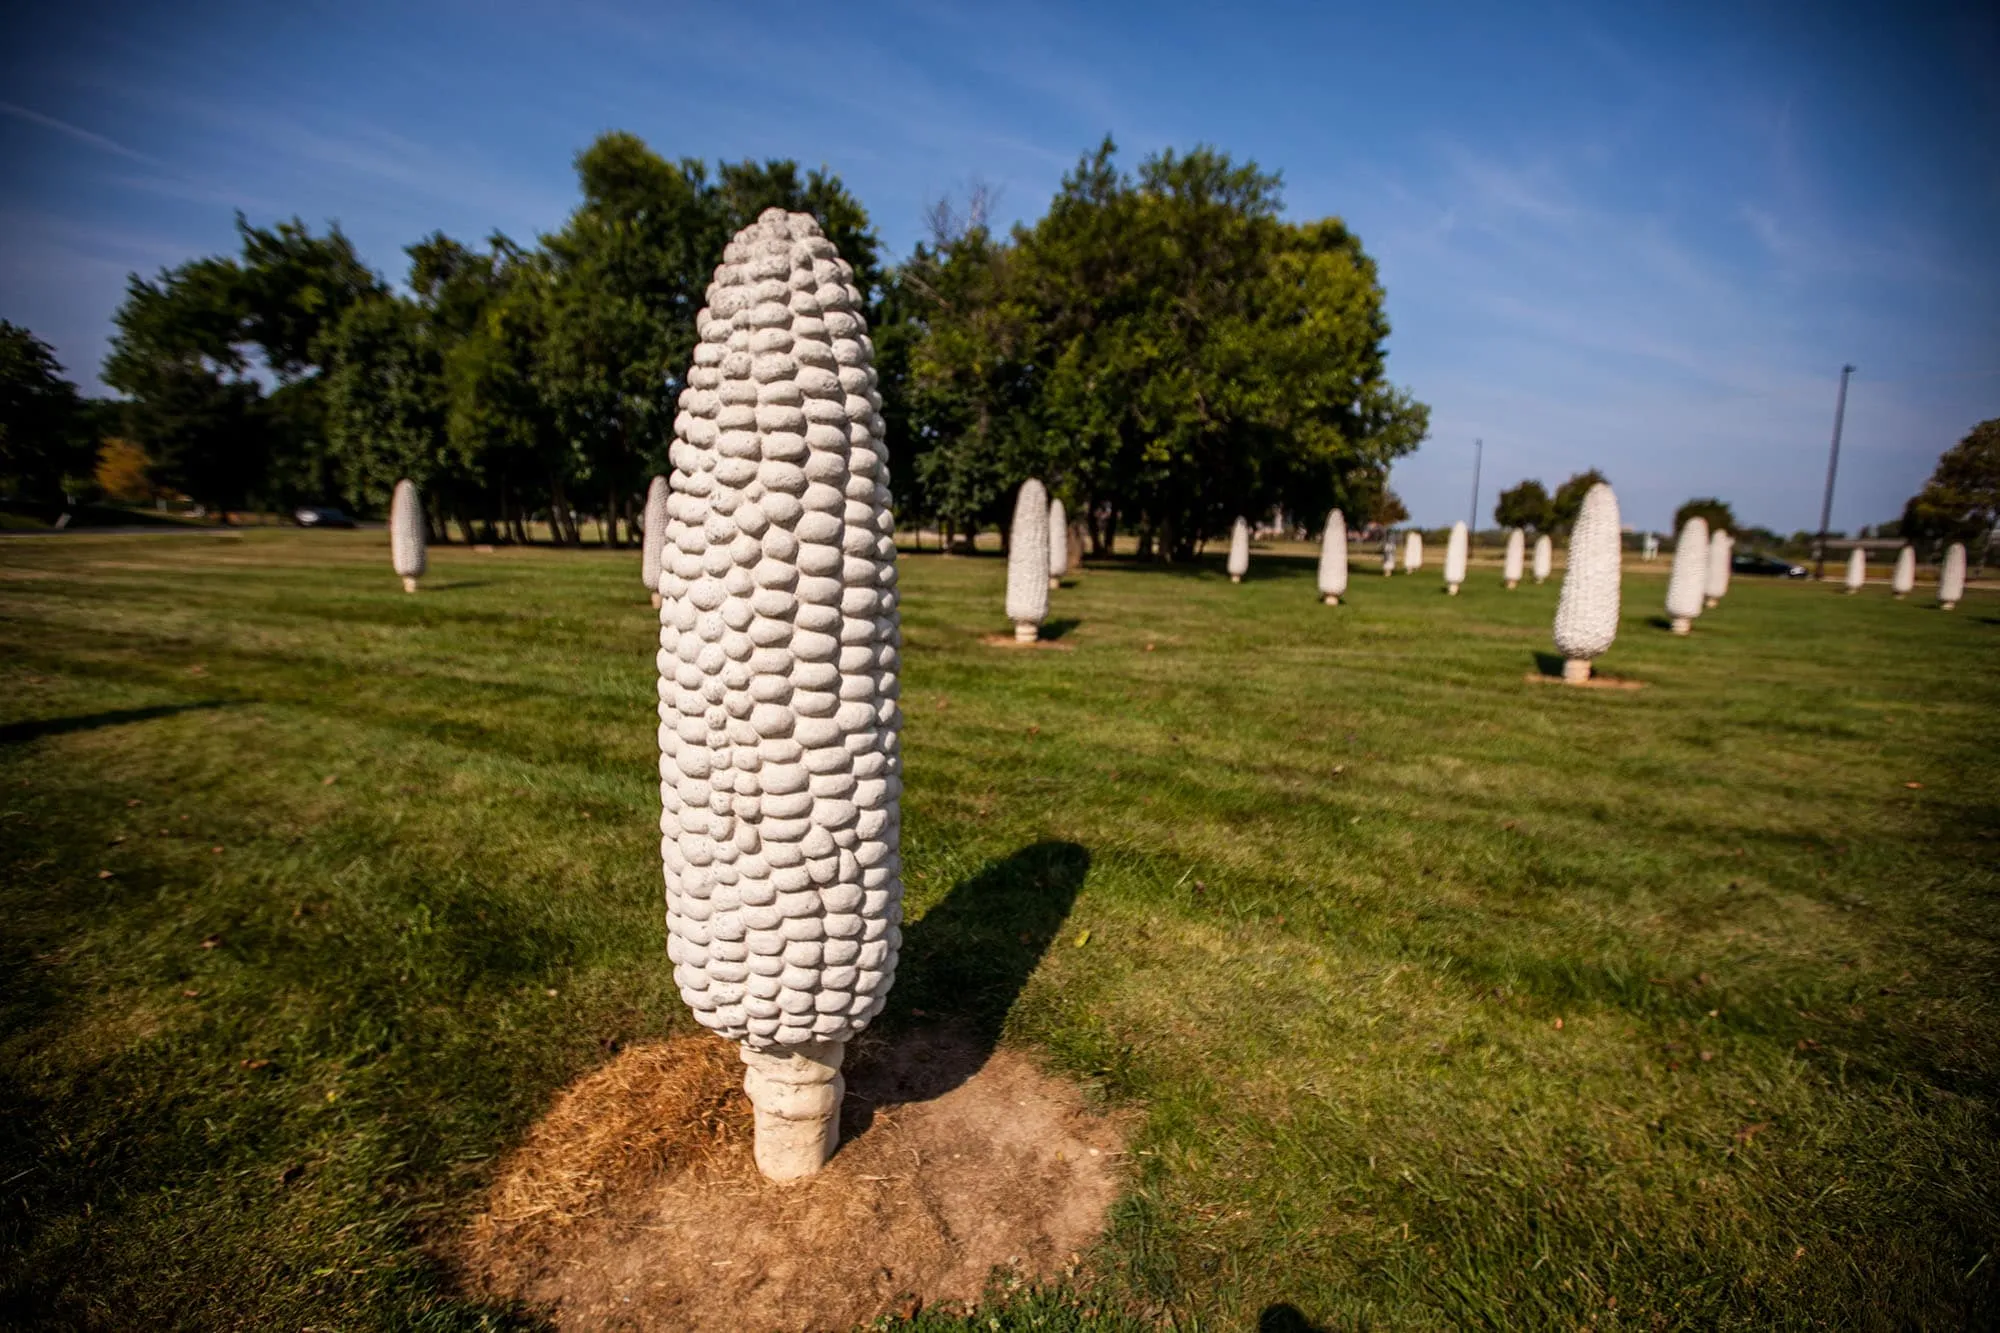 Field of Giant Corn Cobs in Dublin, Ohio